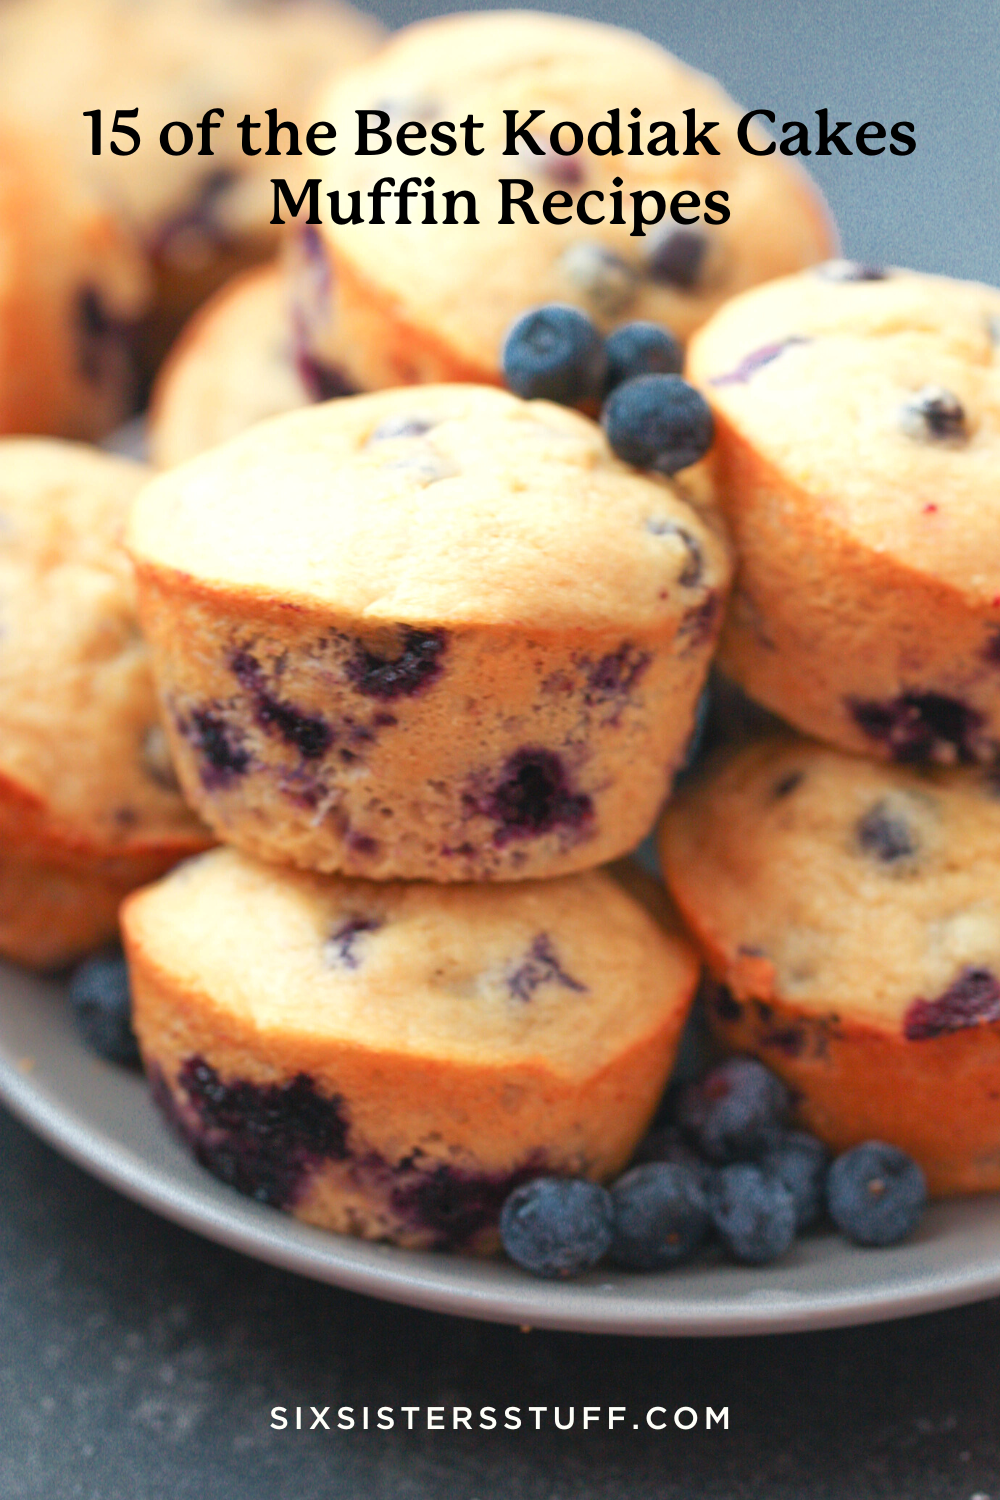 15 of the Best Kodiak Cakes Muffin Recipes